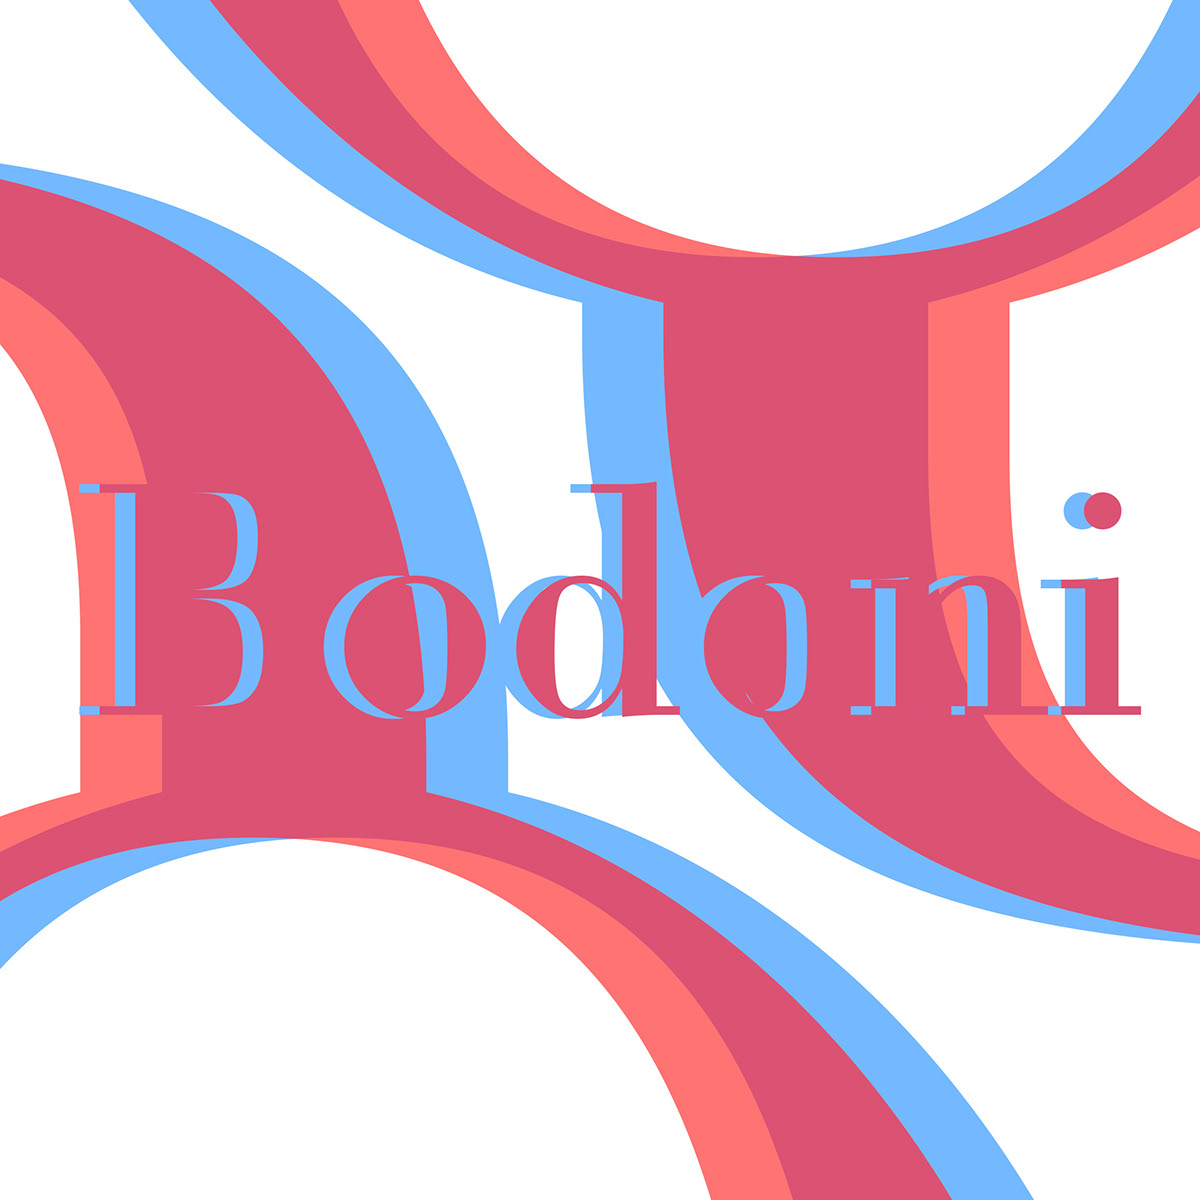 Typeface Experimentation colour letterforms helvetica Gill Sans bodoni rockwell Futura